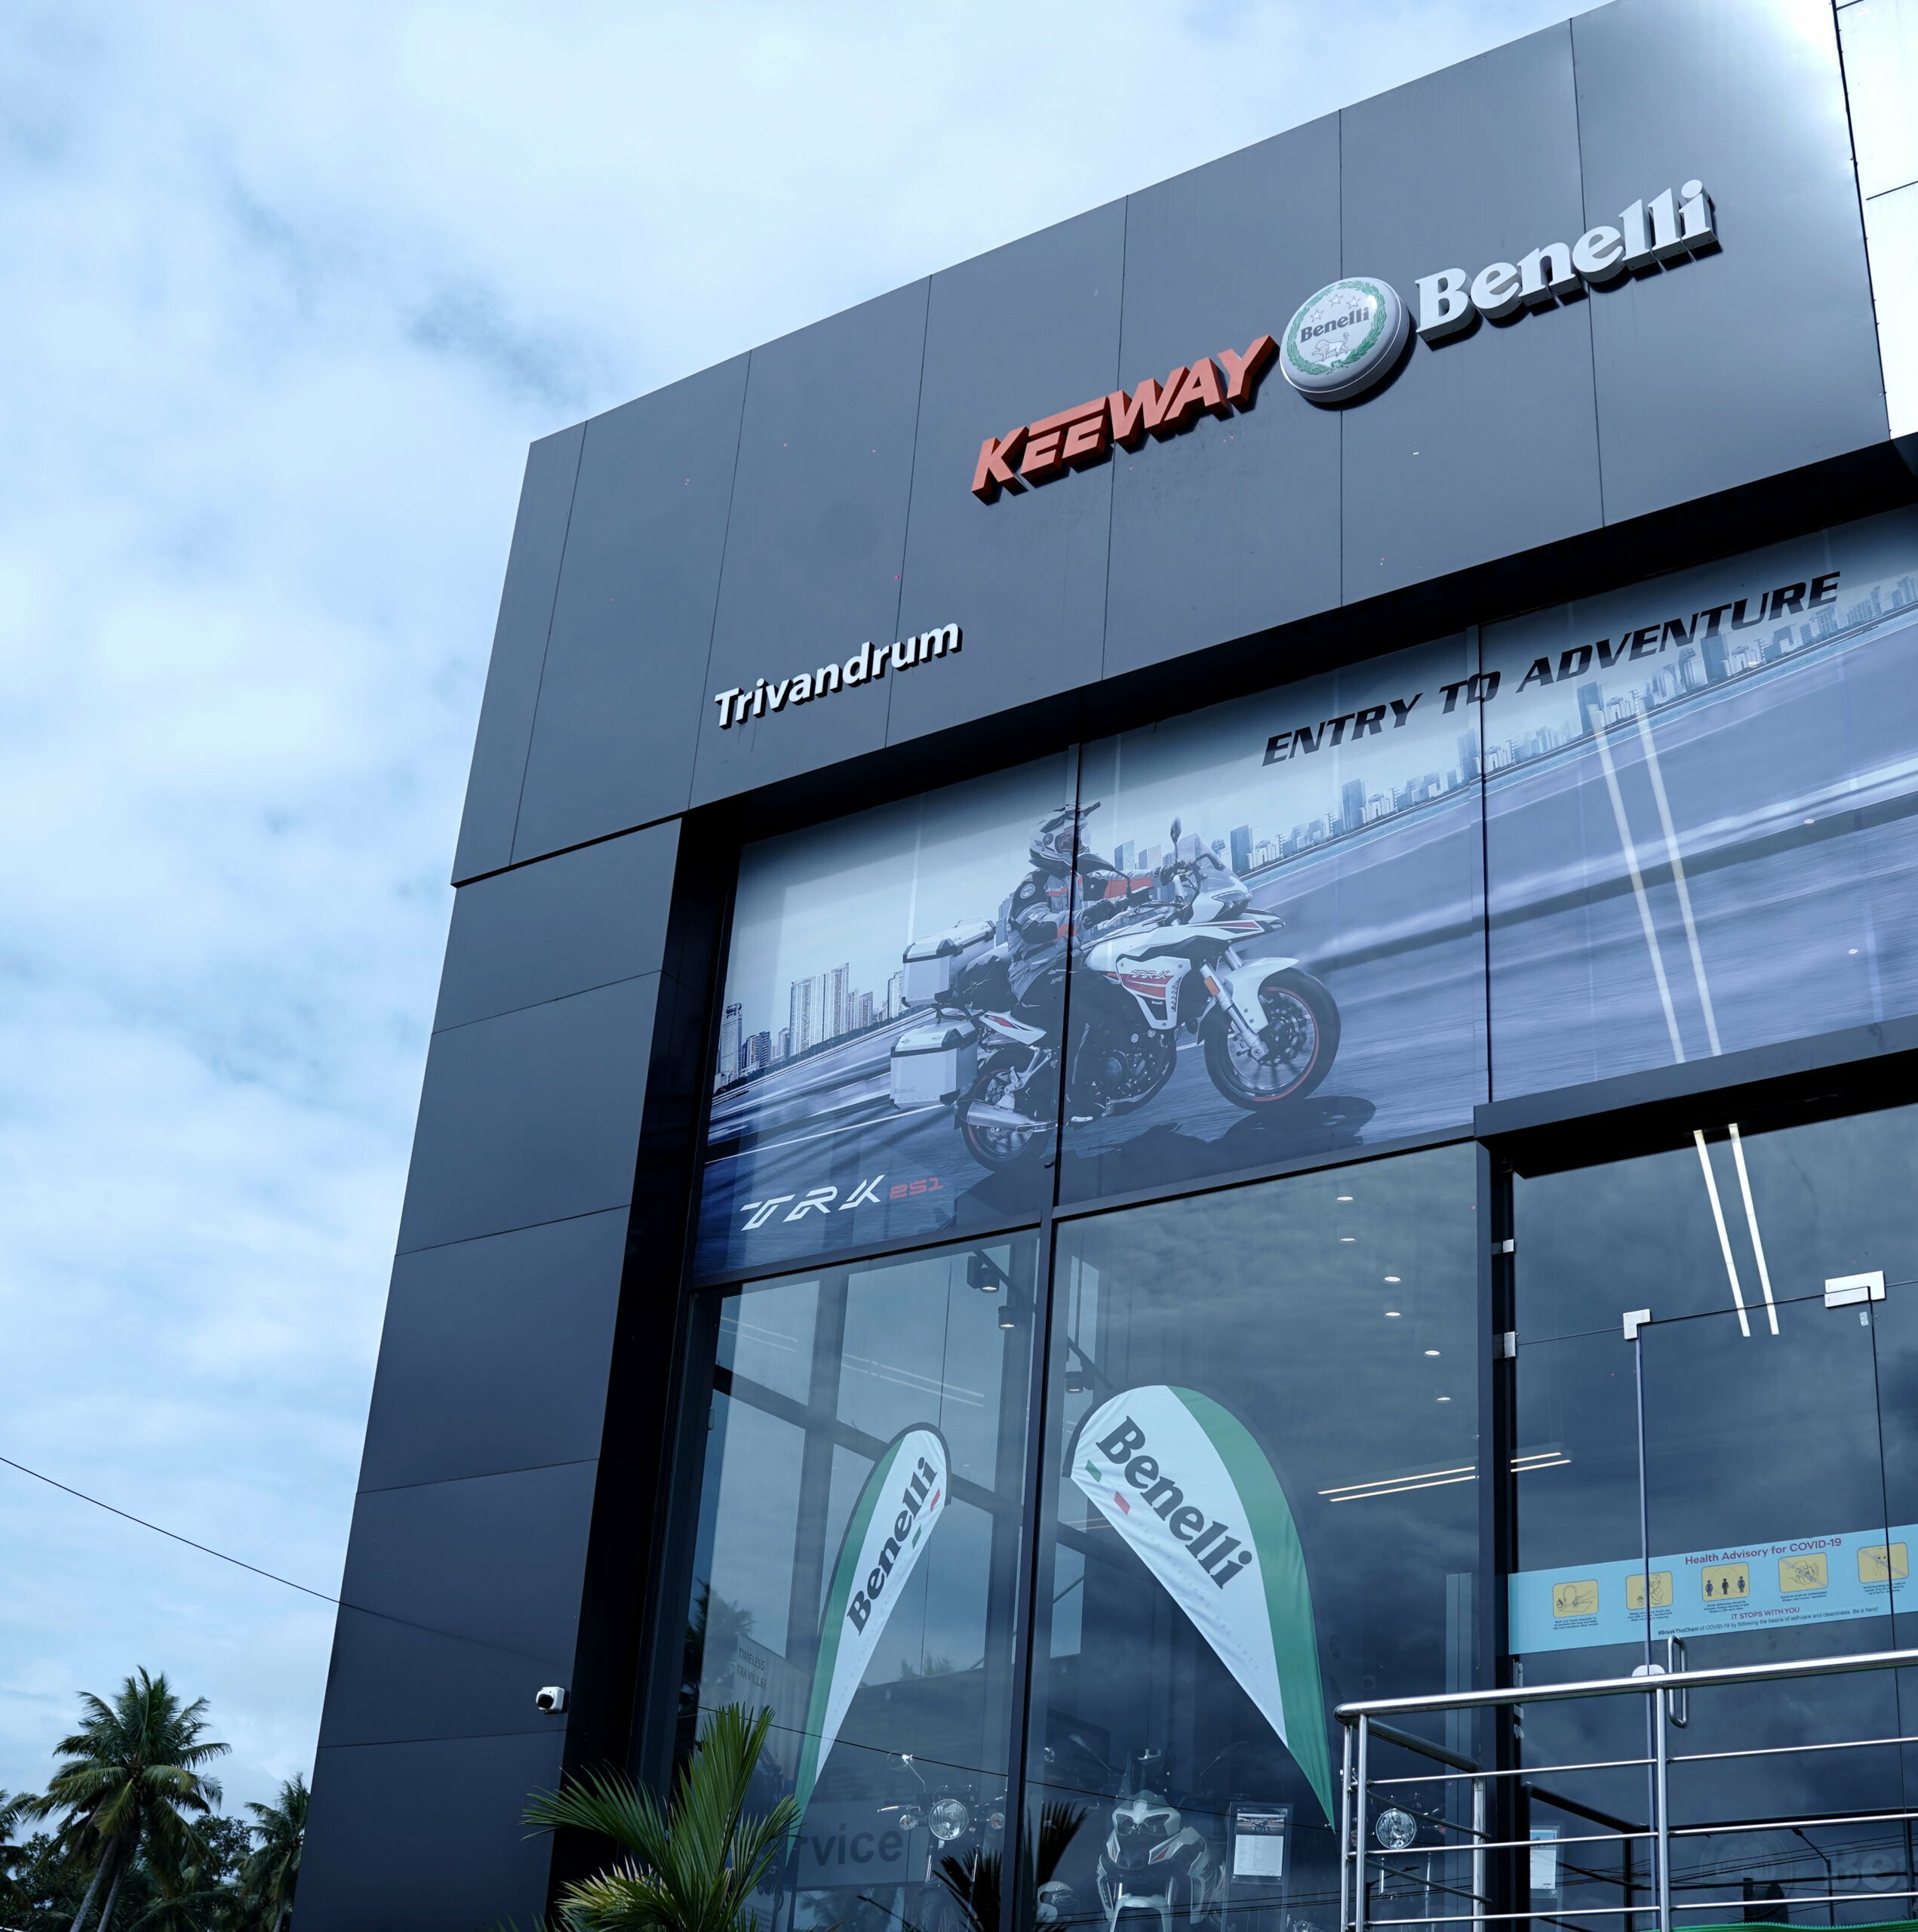 Benelli Keeway India Inaugurated 50th Dealership At Trivandrum (2)